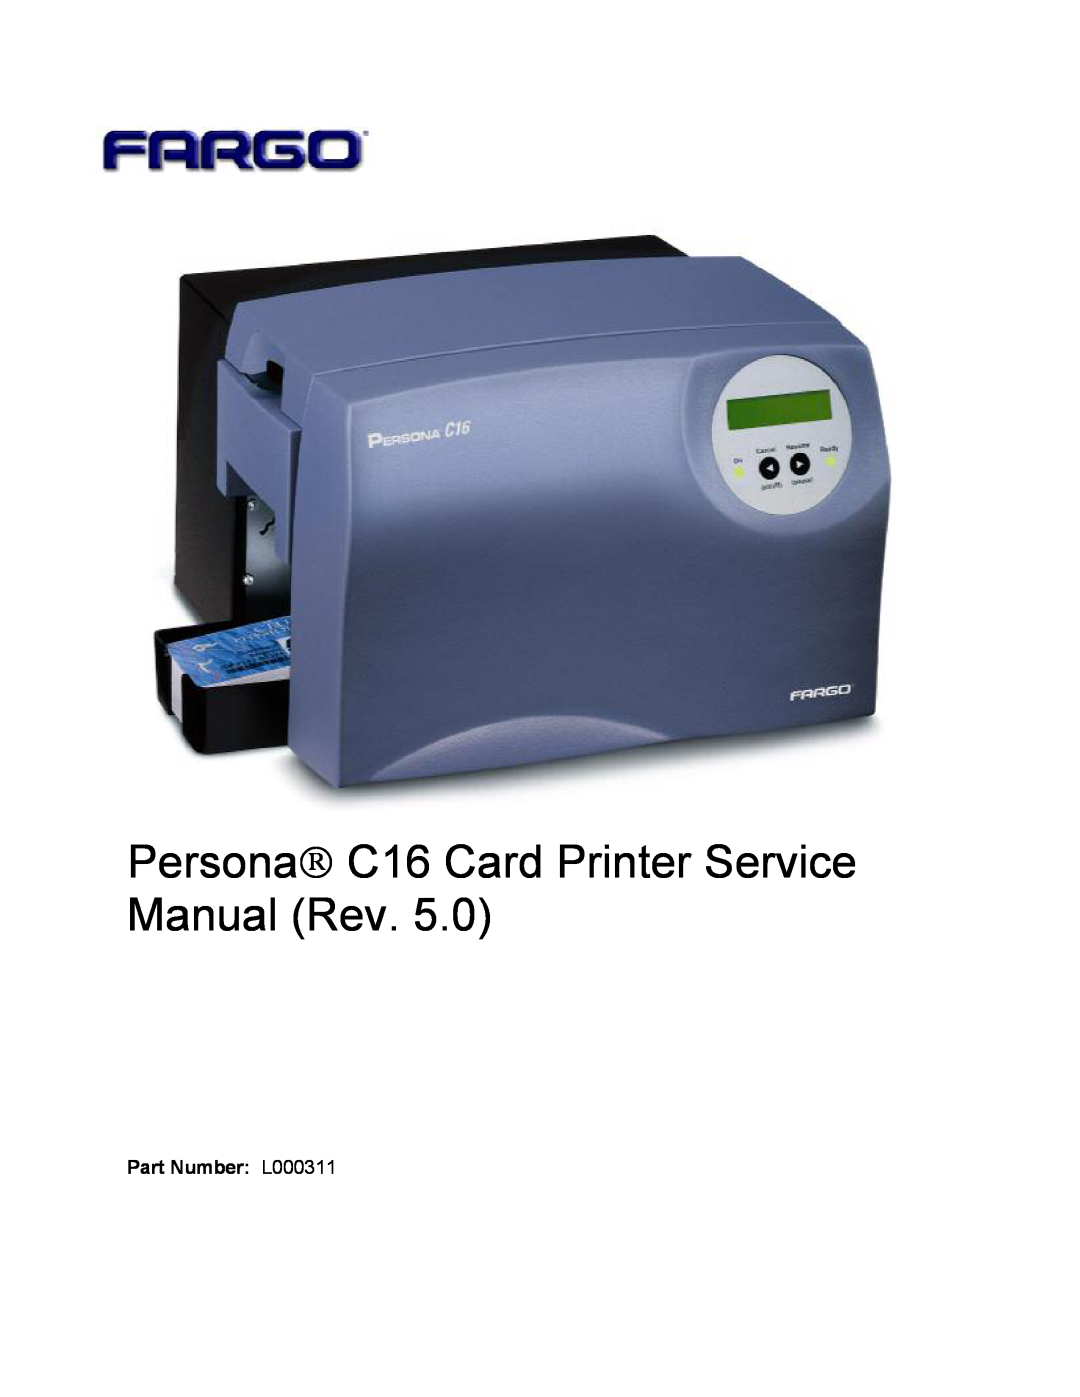 FARGO electronic service manual Persona C16 Card Printer Service Manual Rev, Part Number L000311 